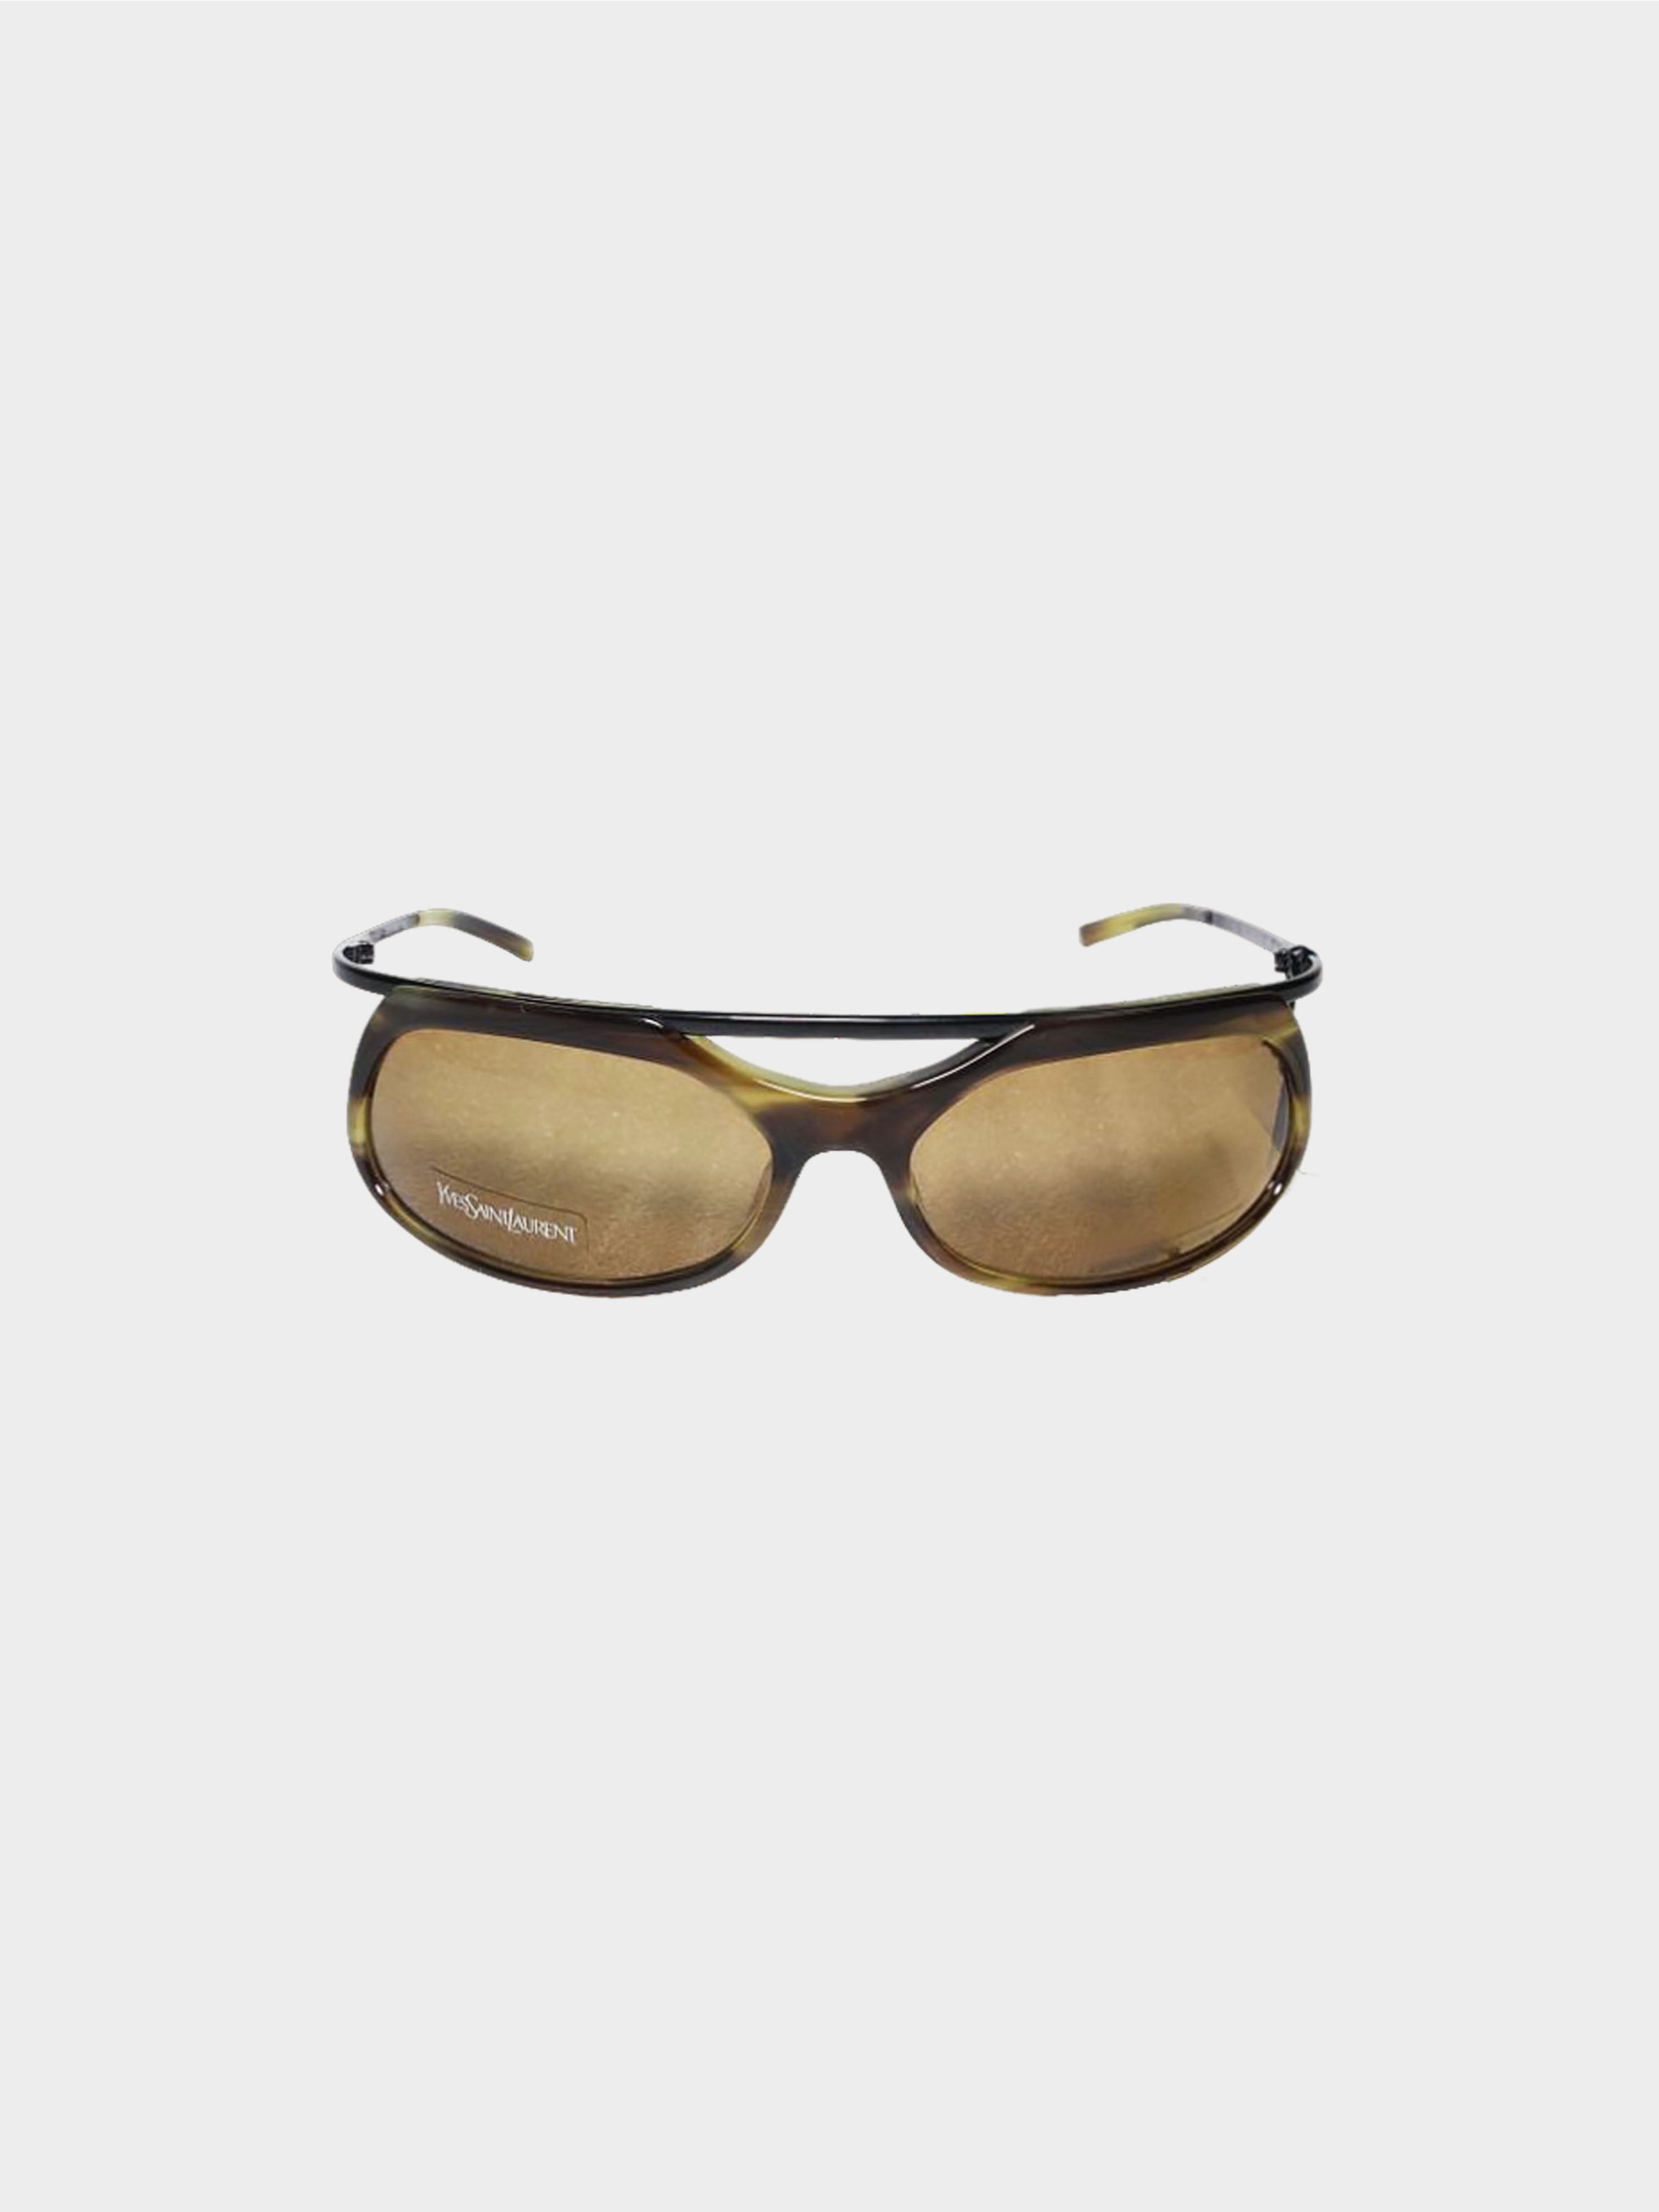 Yves Saint Laurent 2017 Tortoise Oval Sunglasses